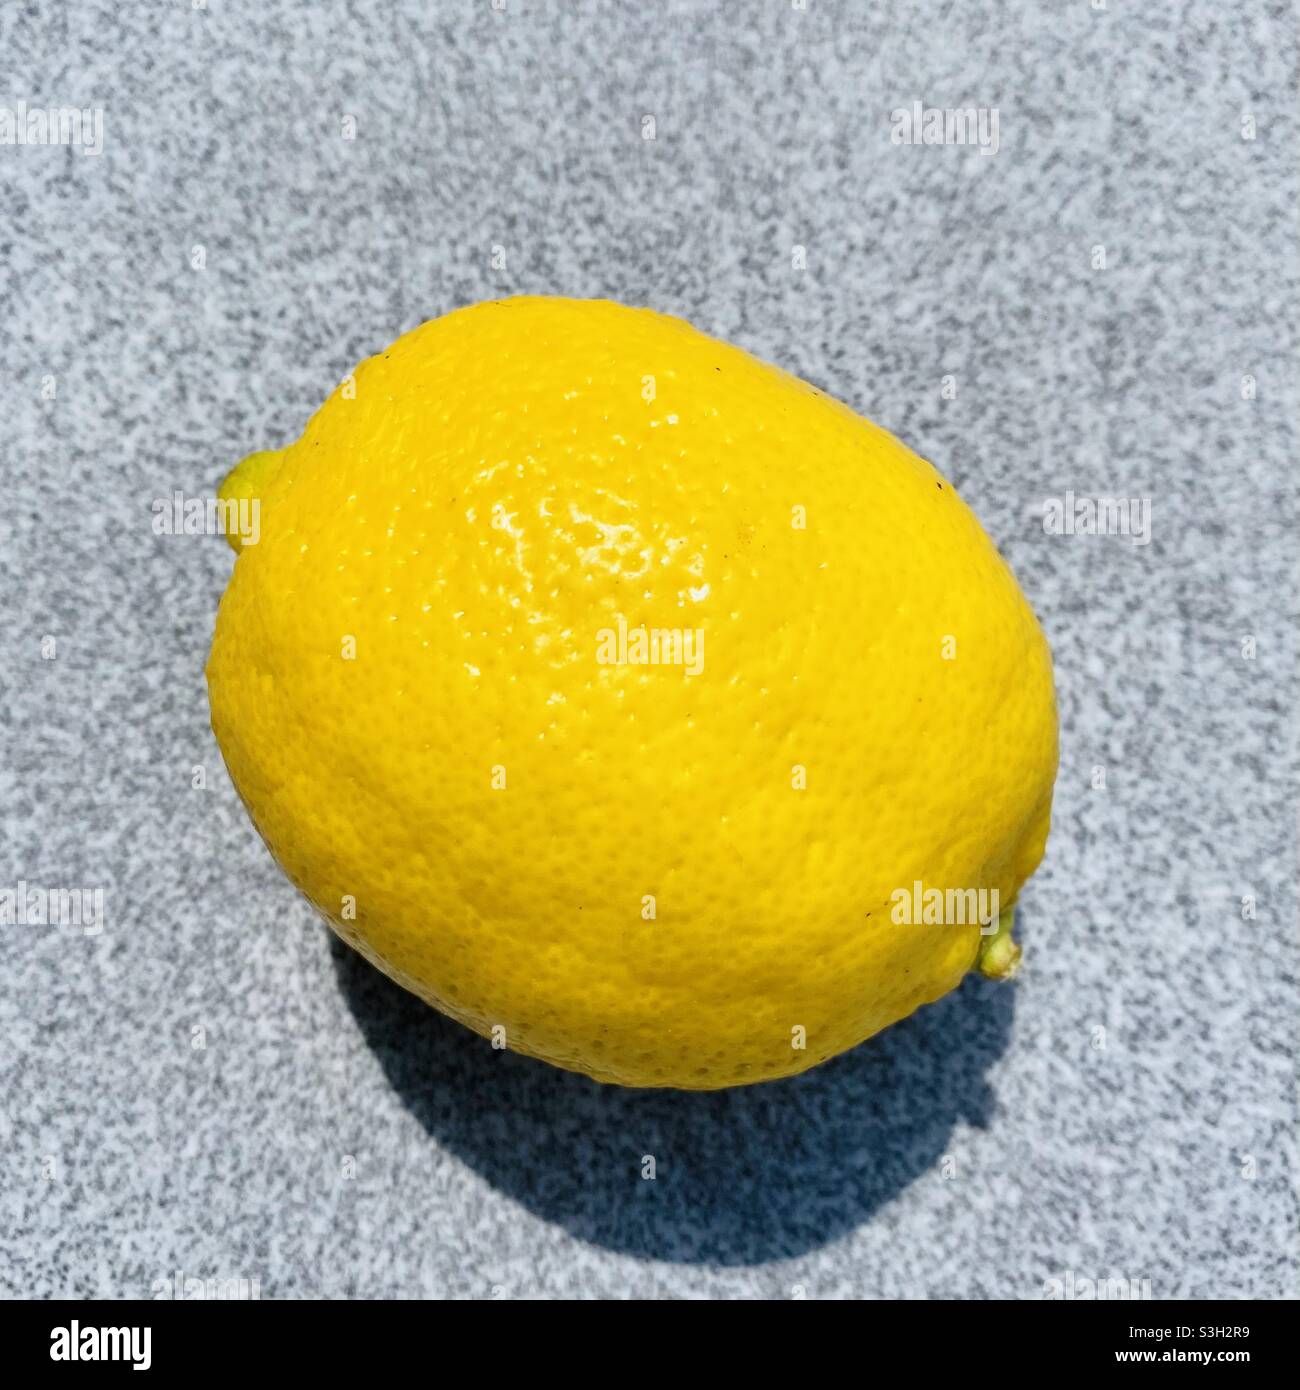 Lemon on a plate Stock Photo